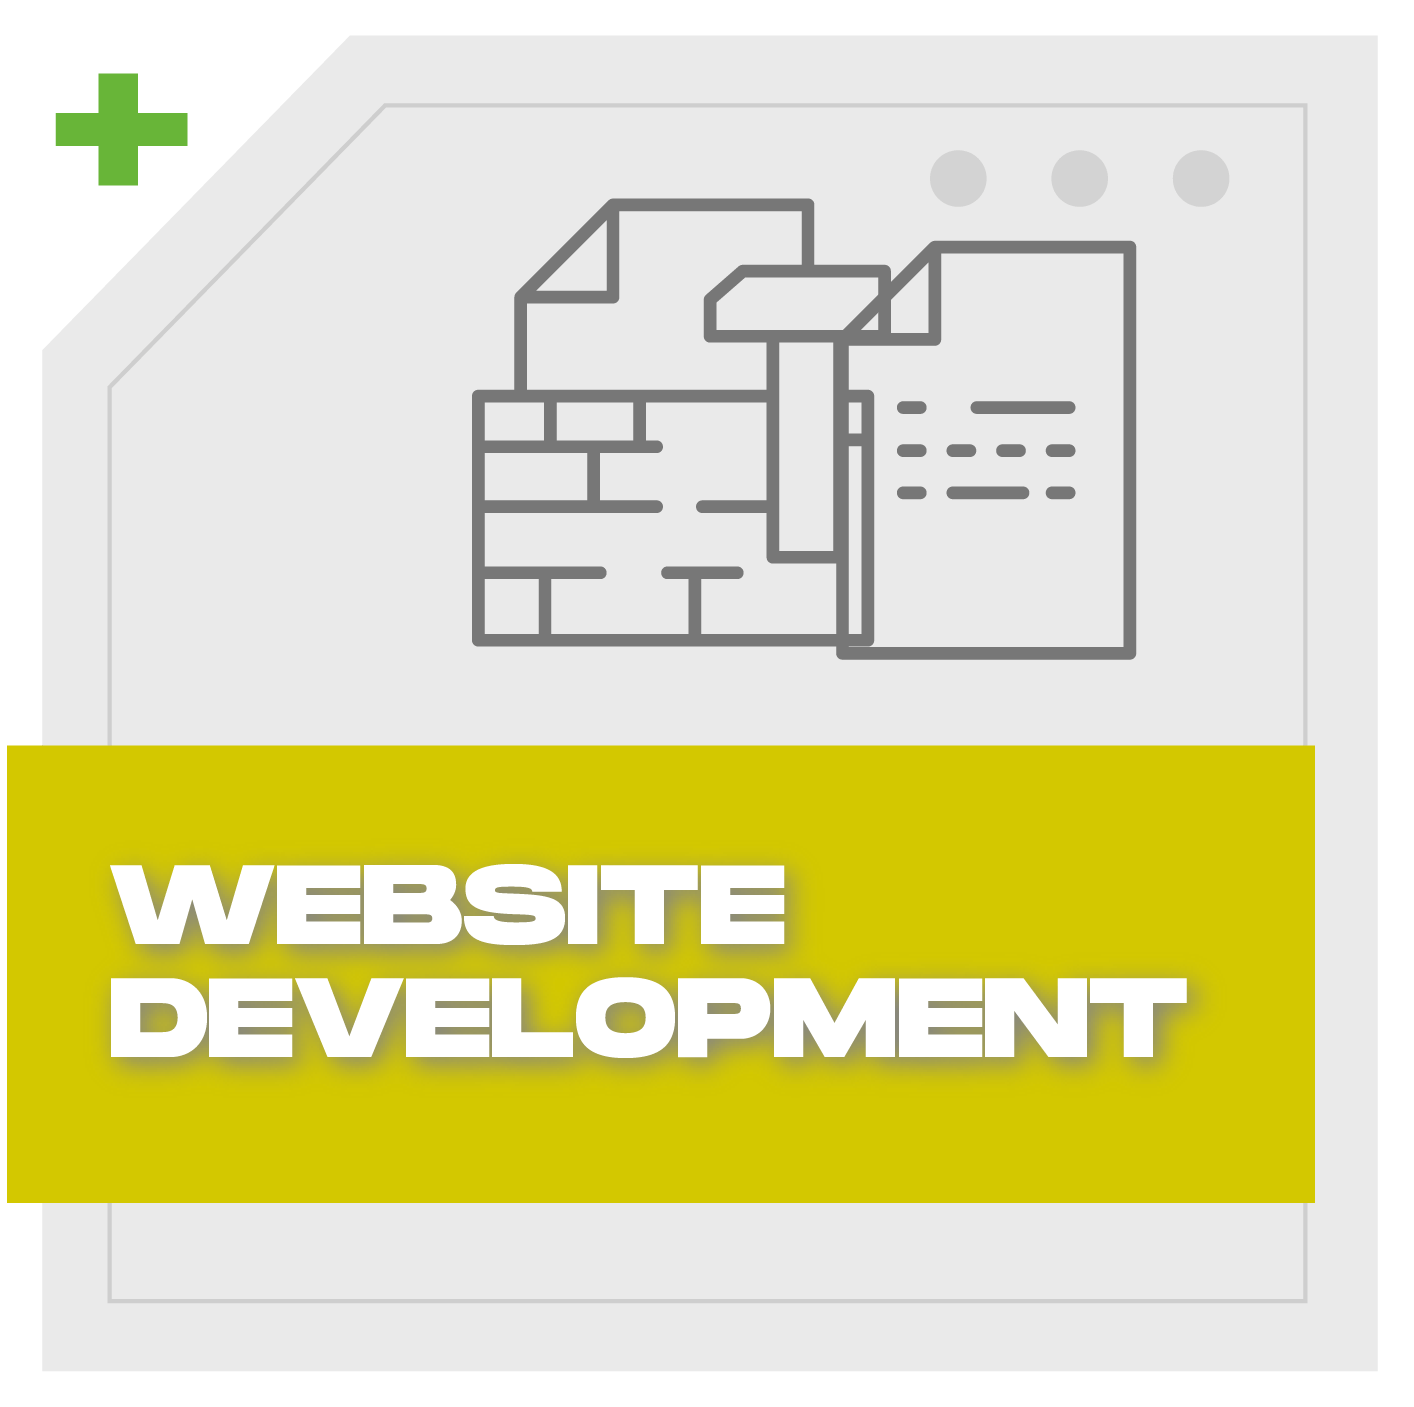 Website Development - Digital Marketing